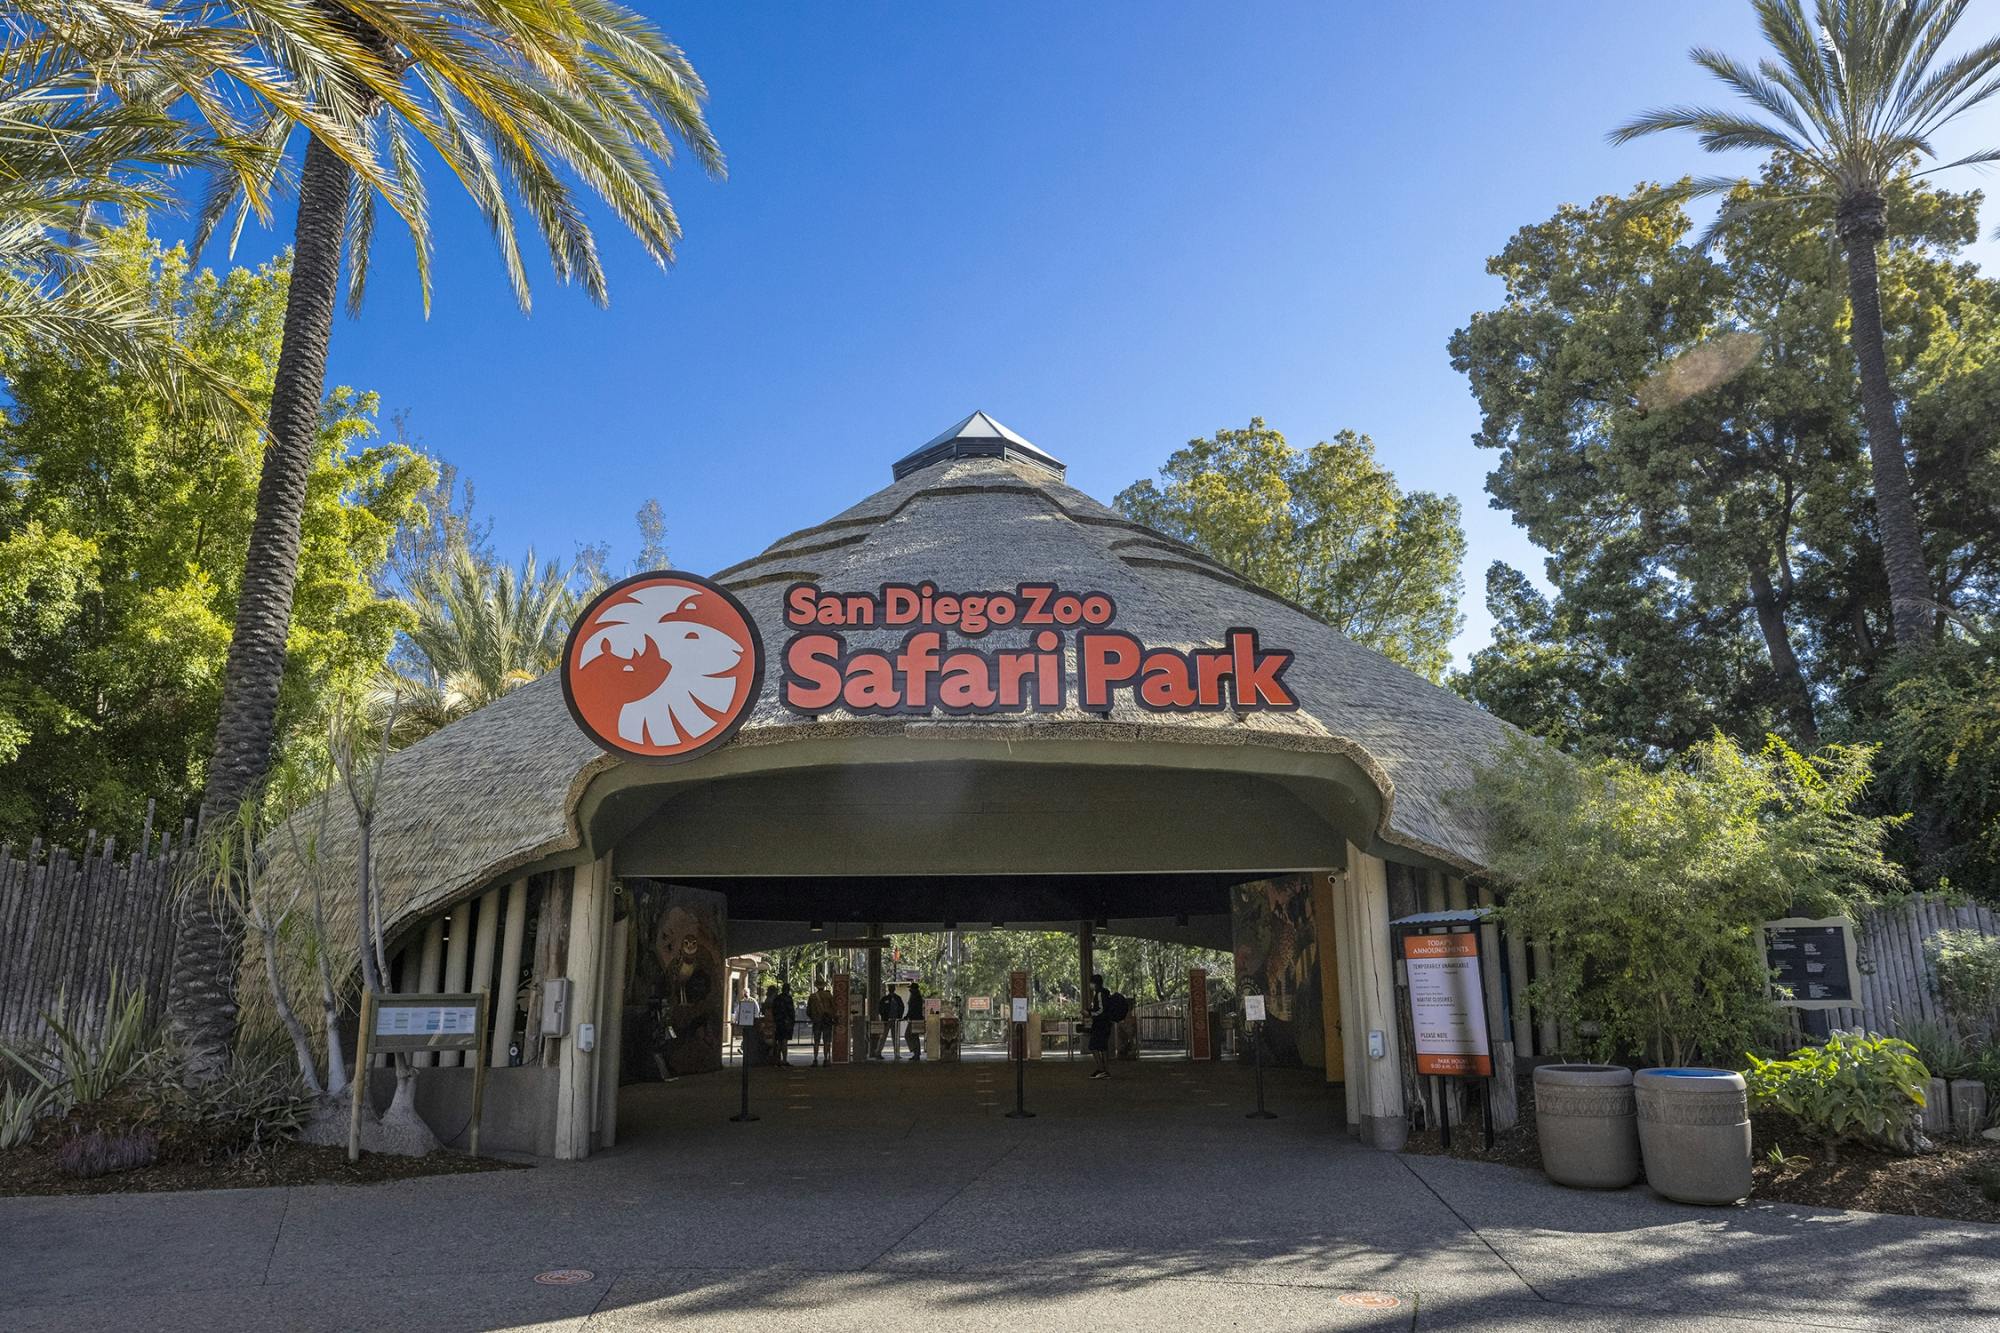 Passe de 1 dia para o San Diego Zoo Safari Park